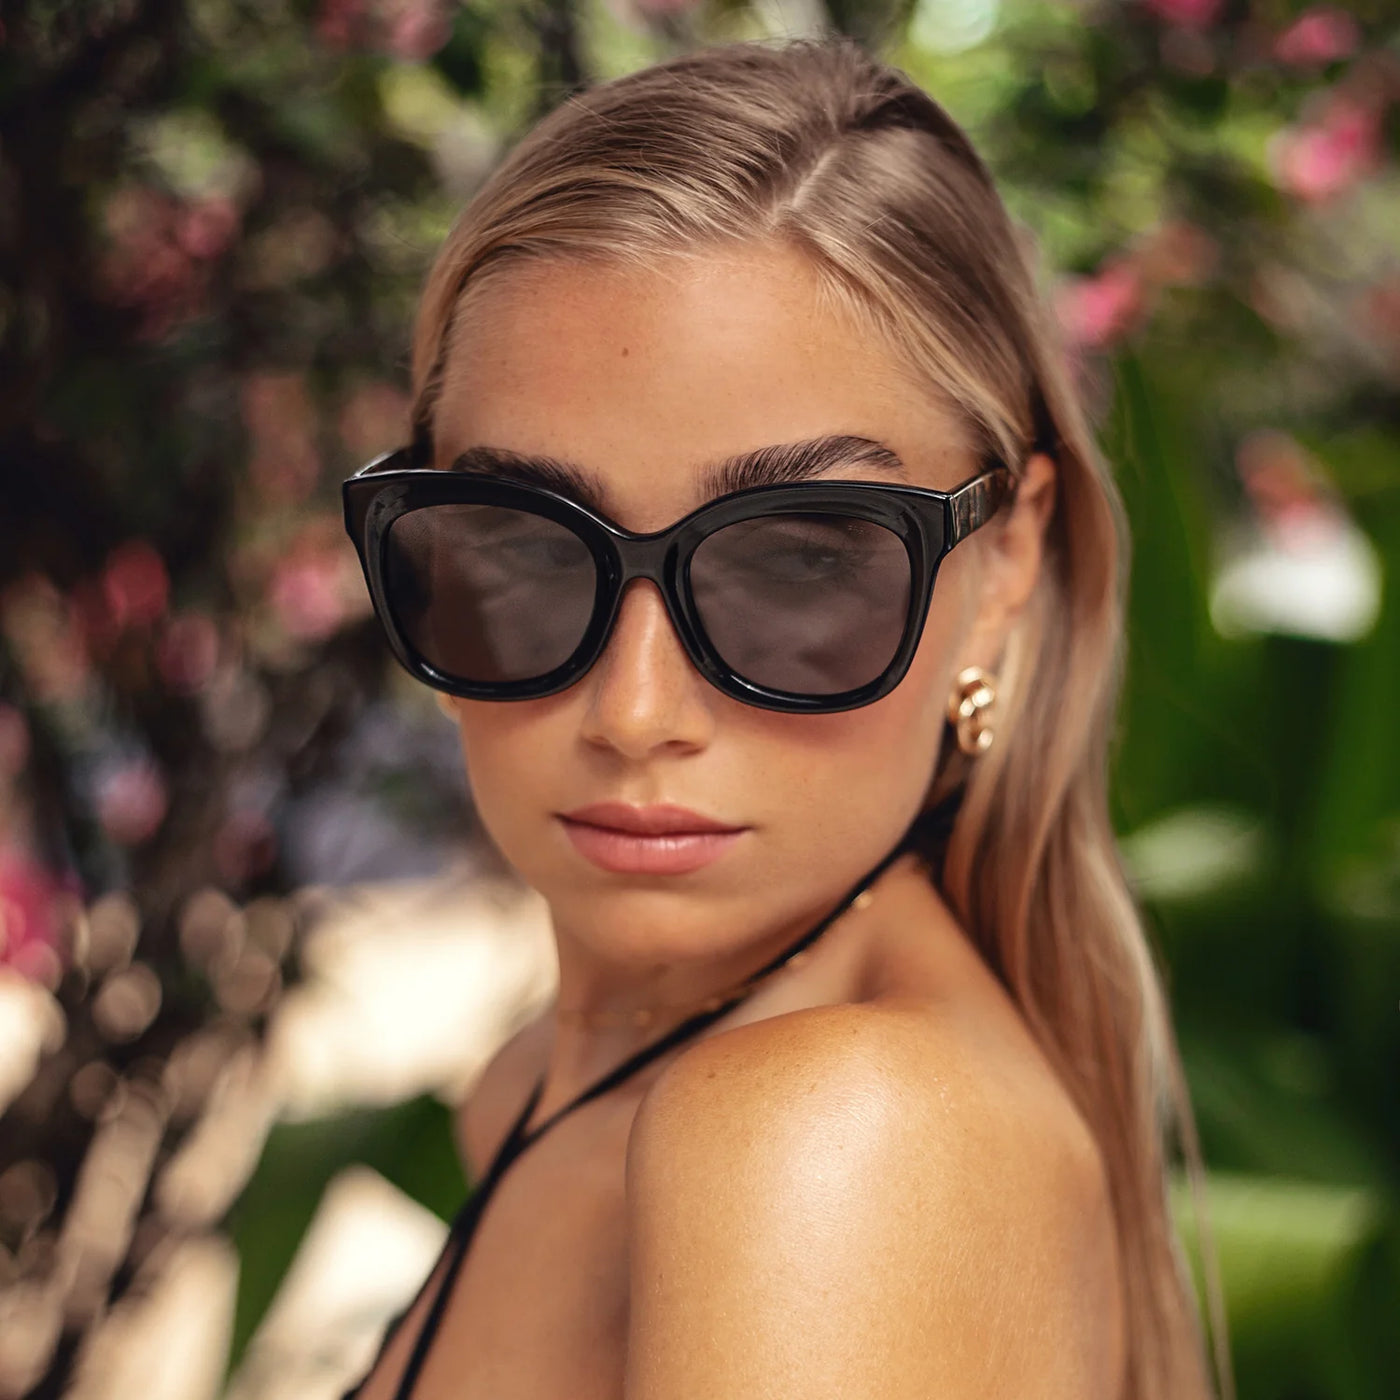 FREYRS: Naples Sunglasses